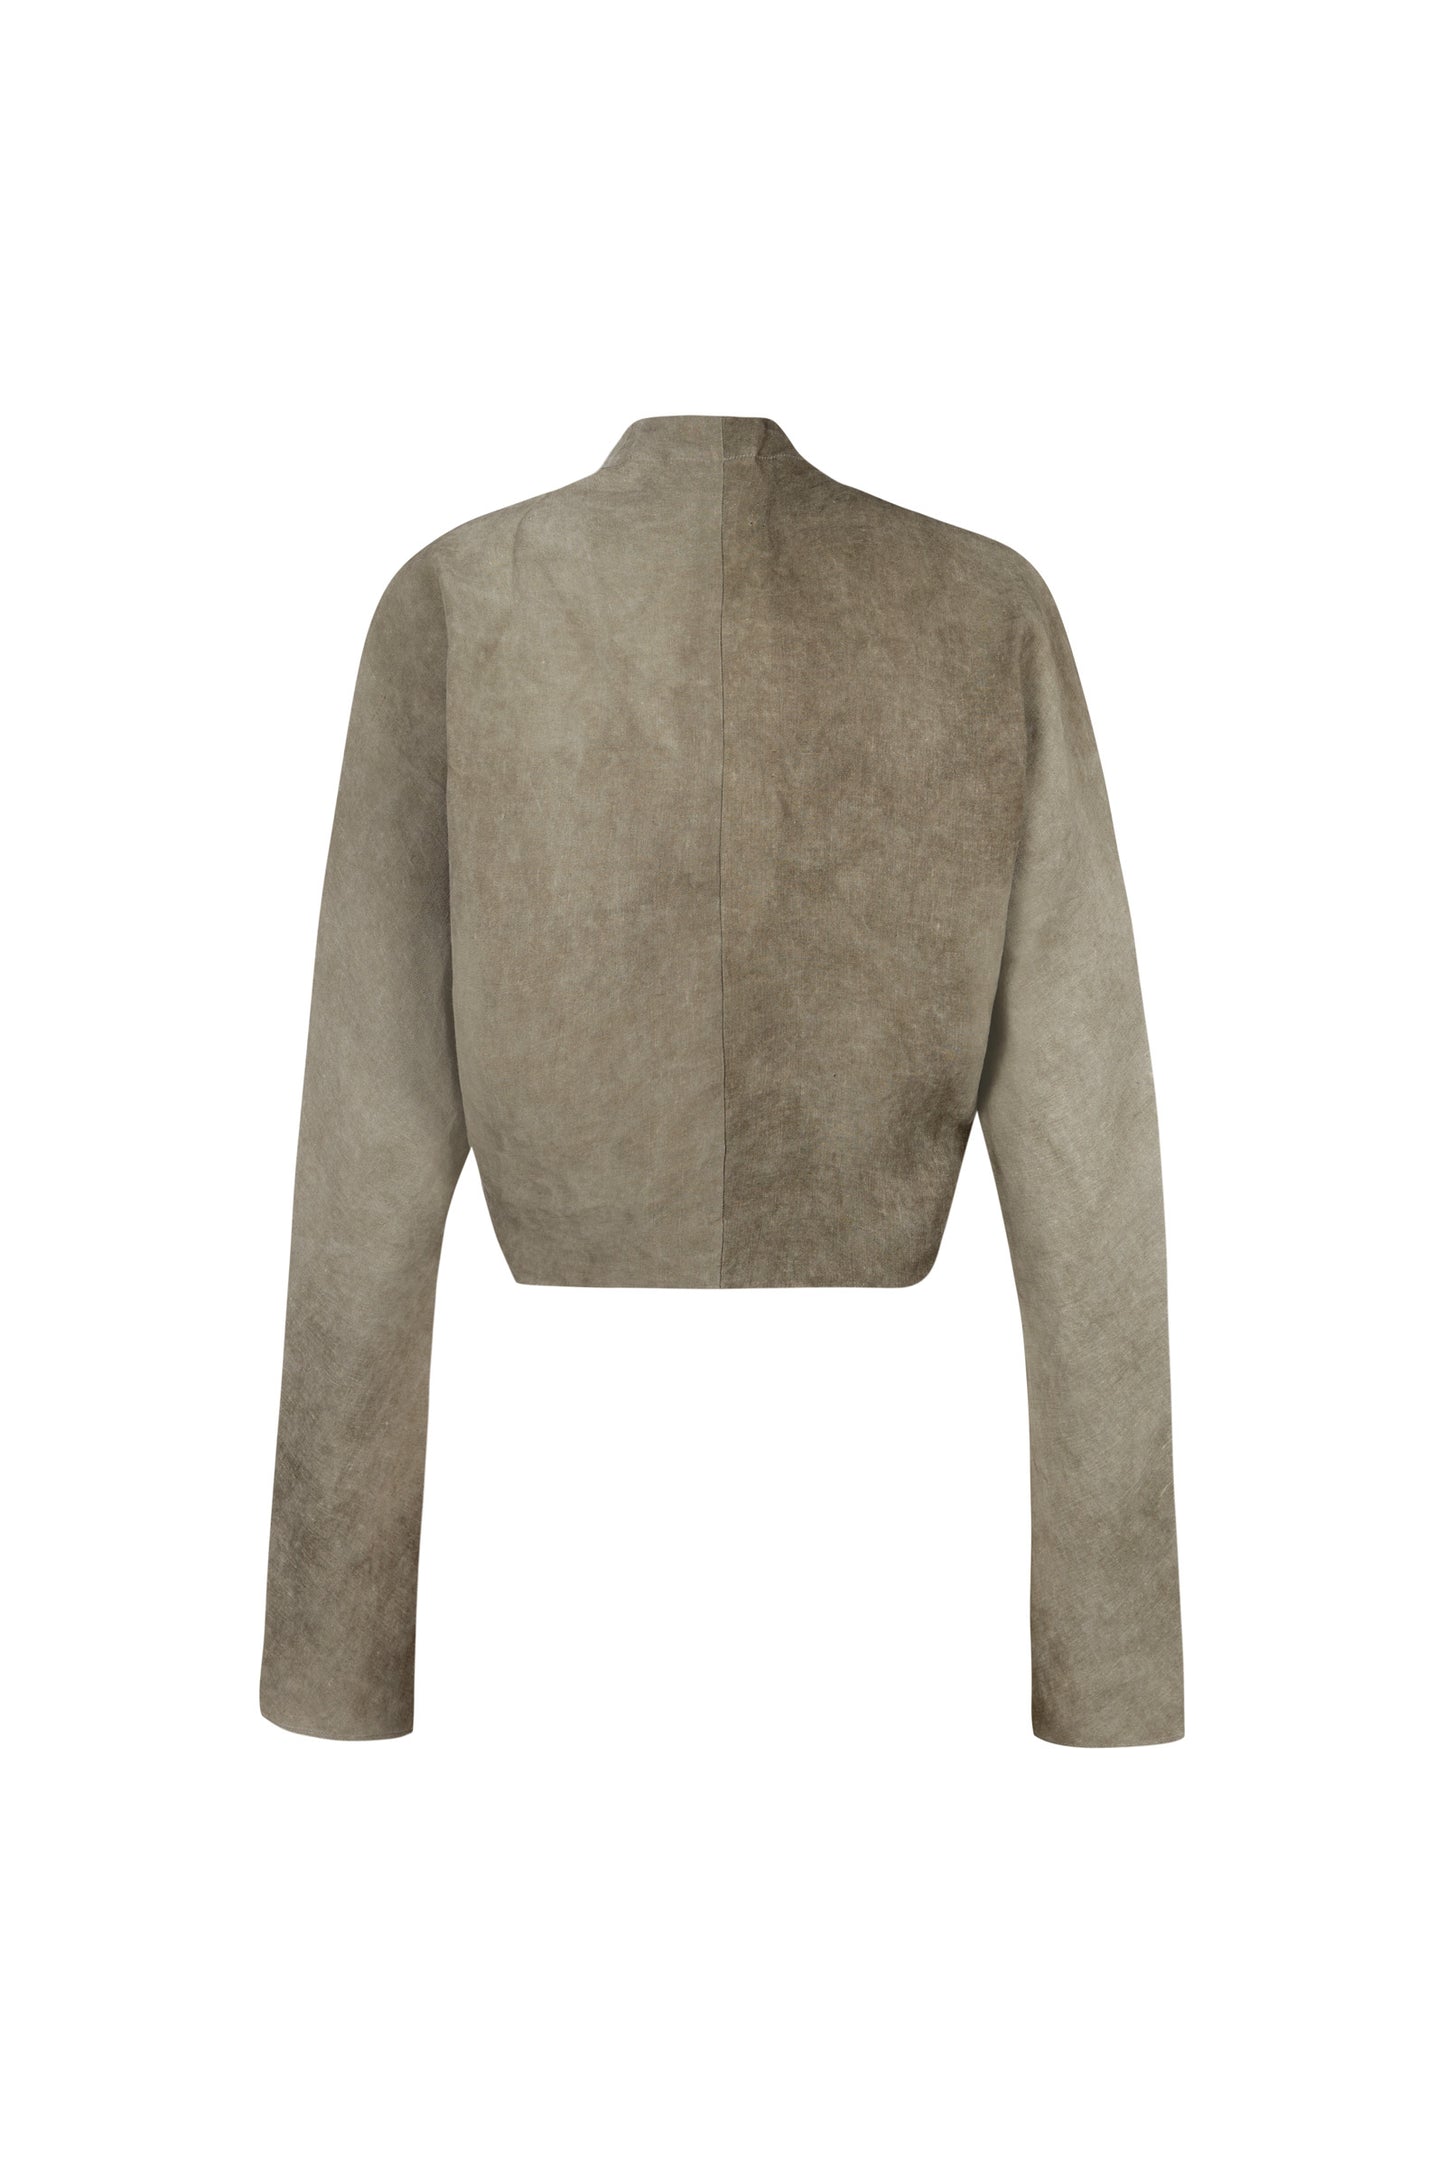 Bimba, chaqueta en lino maltinto gris piedra